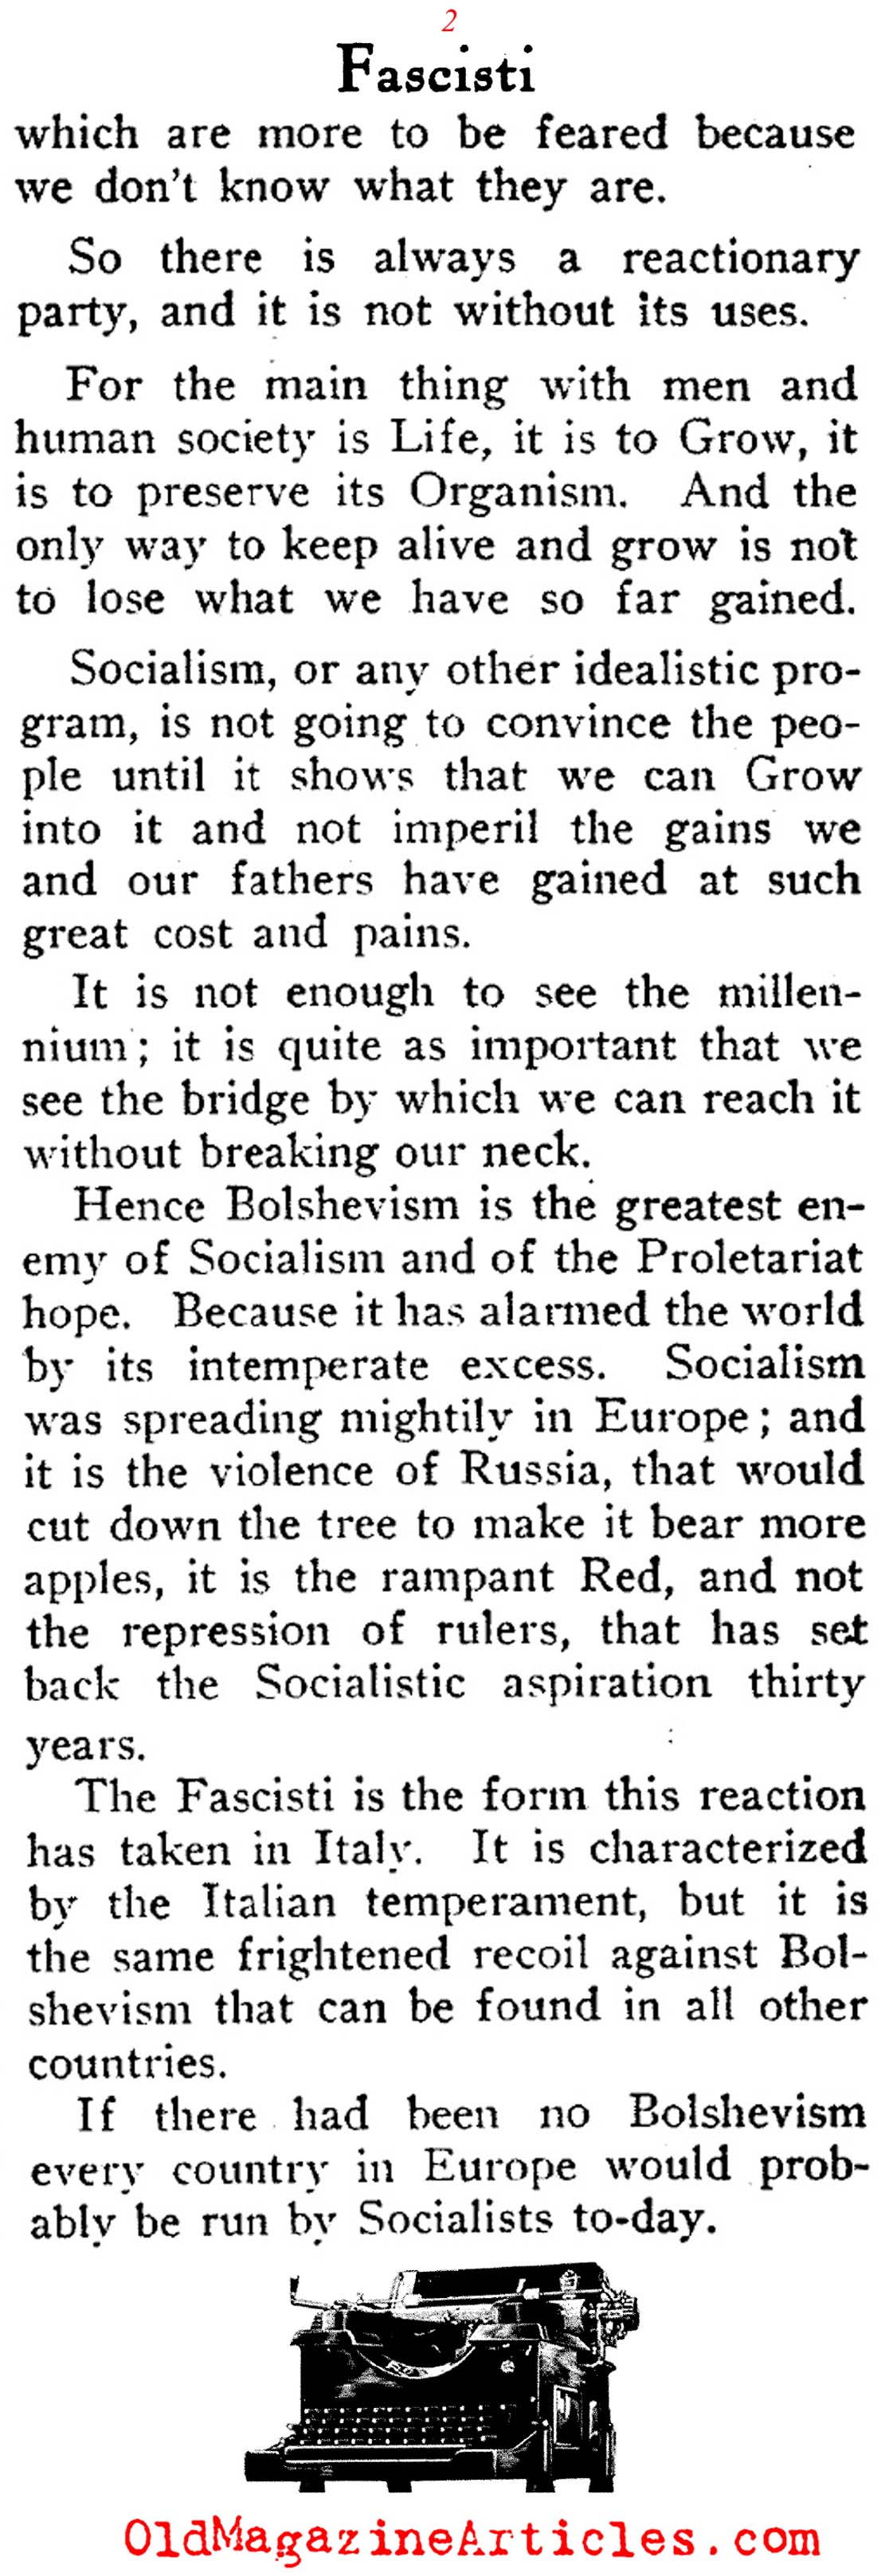 The Fascisti (Current Opinion, 1921)